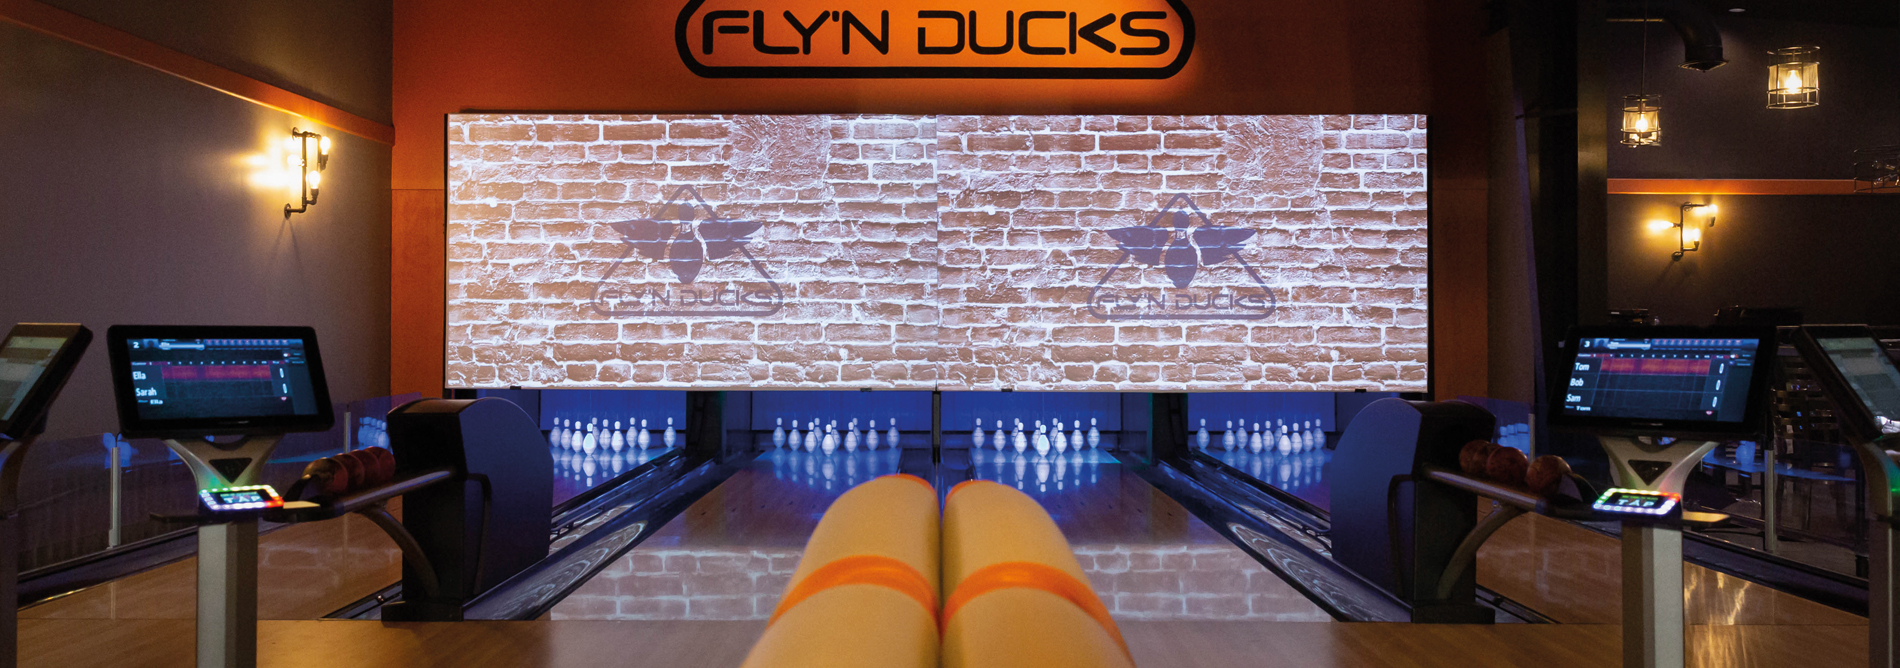 Bowling-QubicaAMF-Flyn-Ducks-banner.jpg